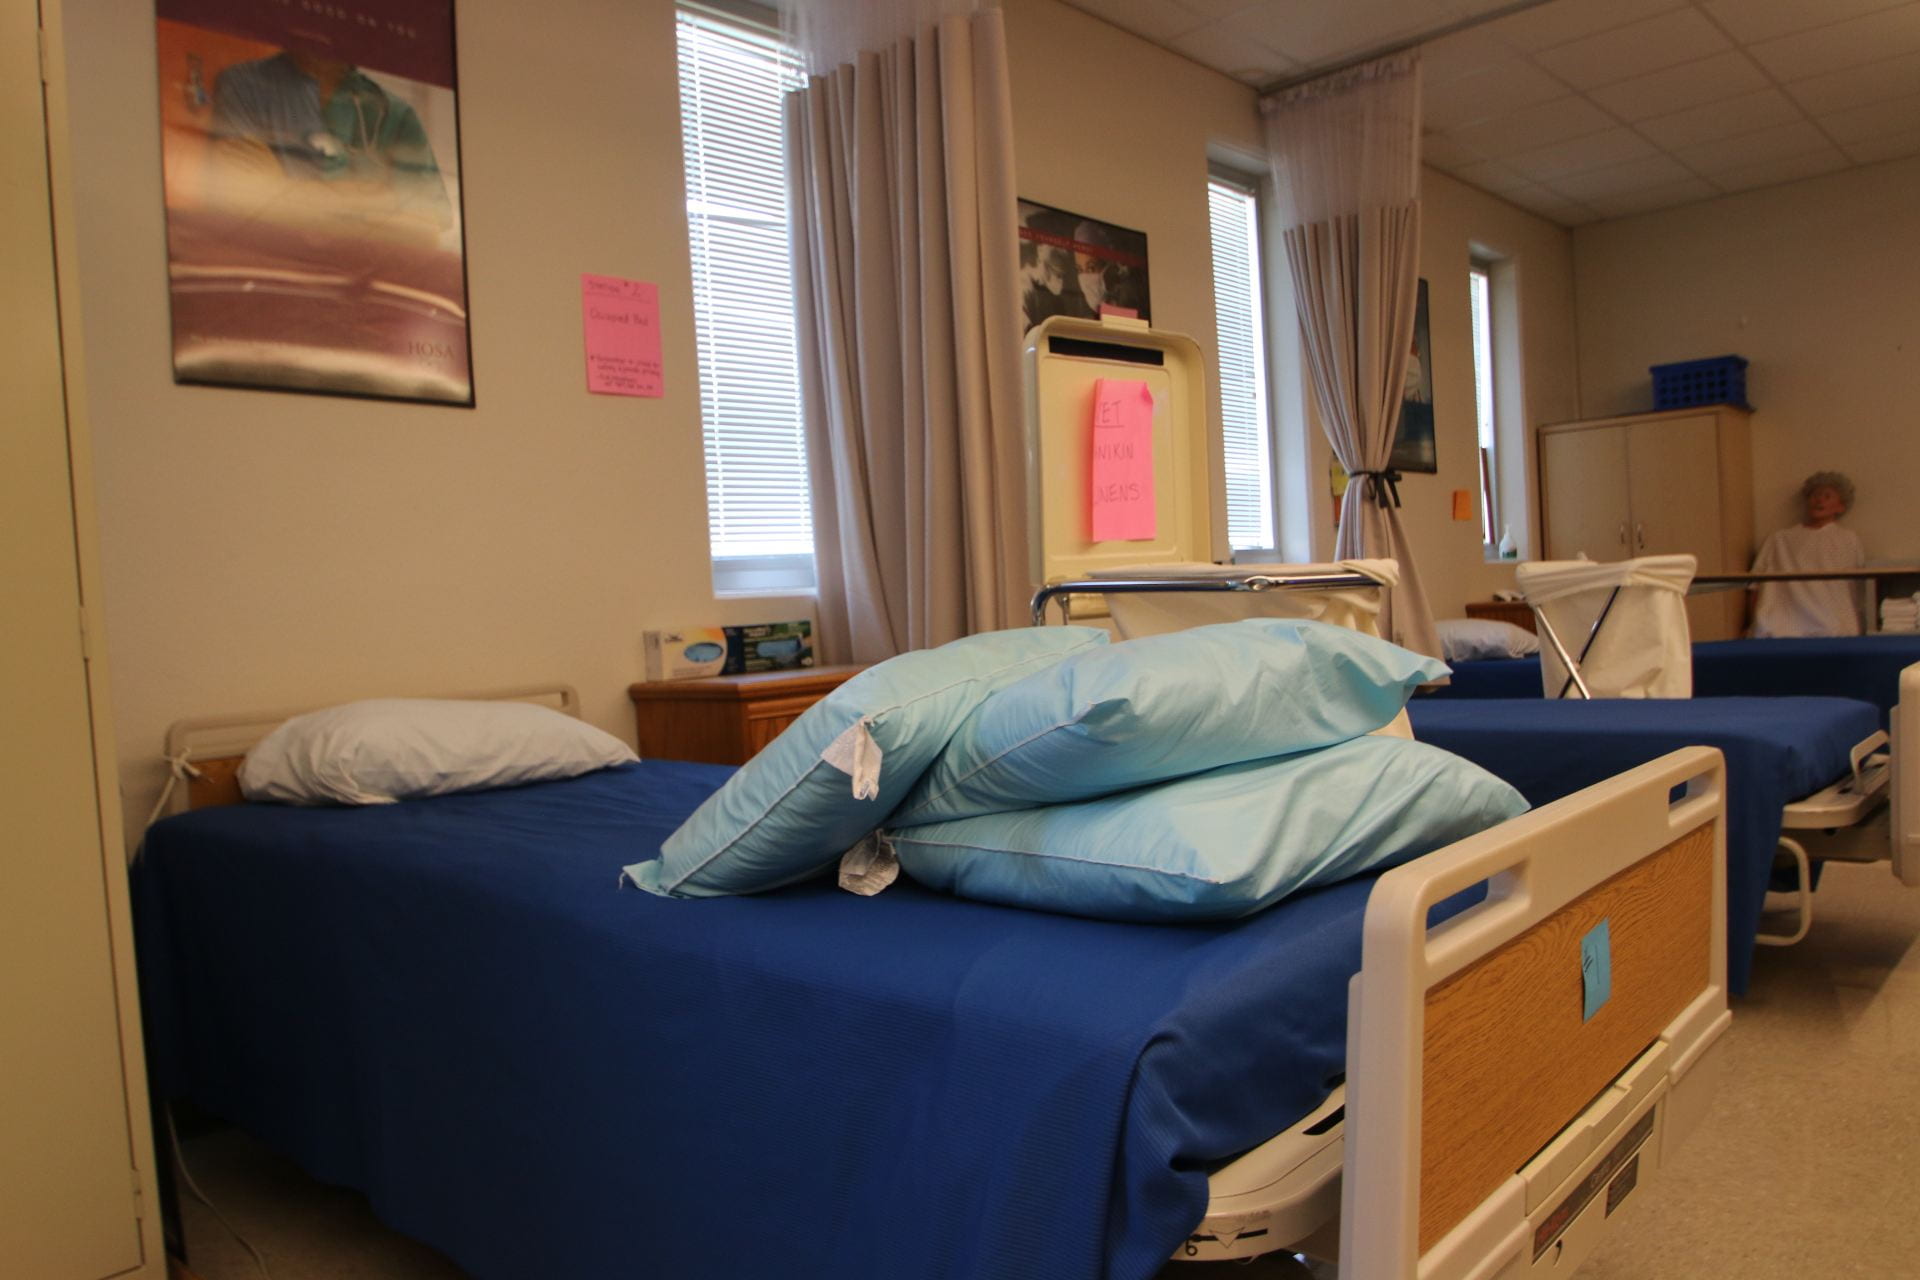 Health classroom with hospital beds